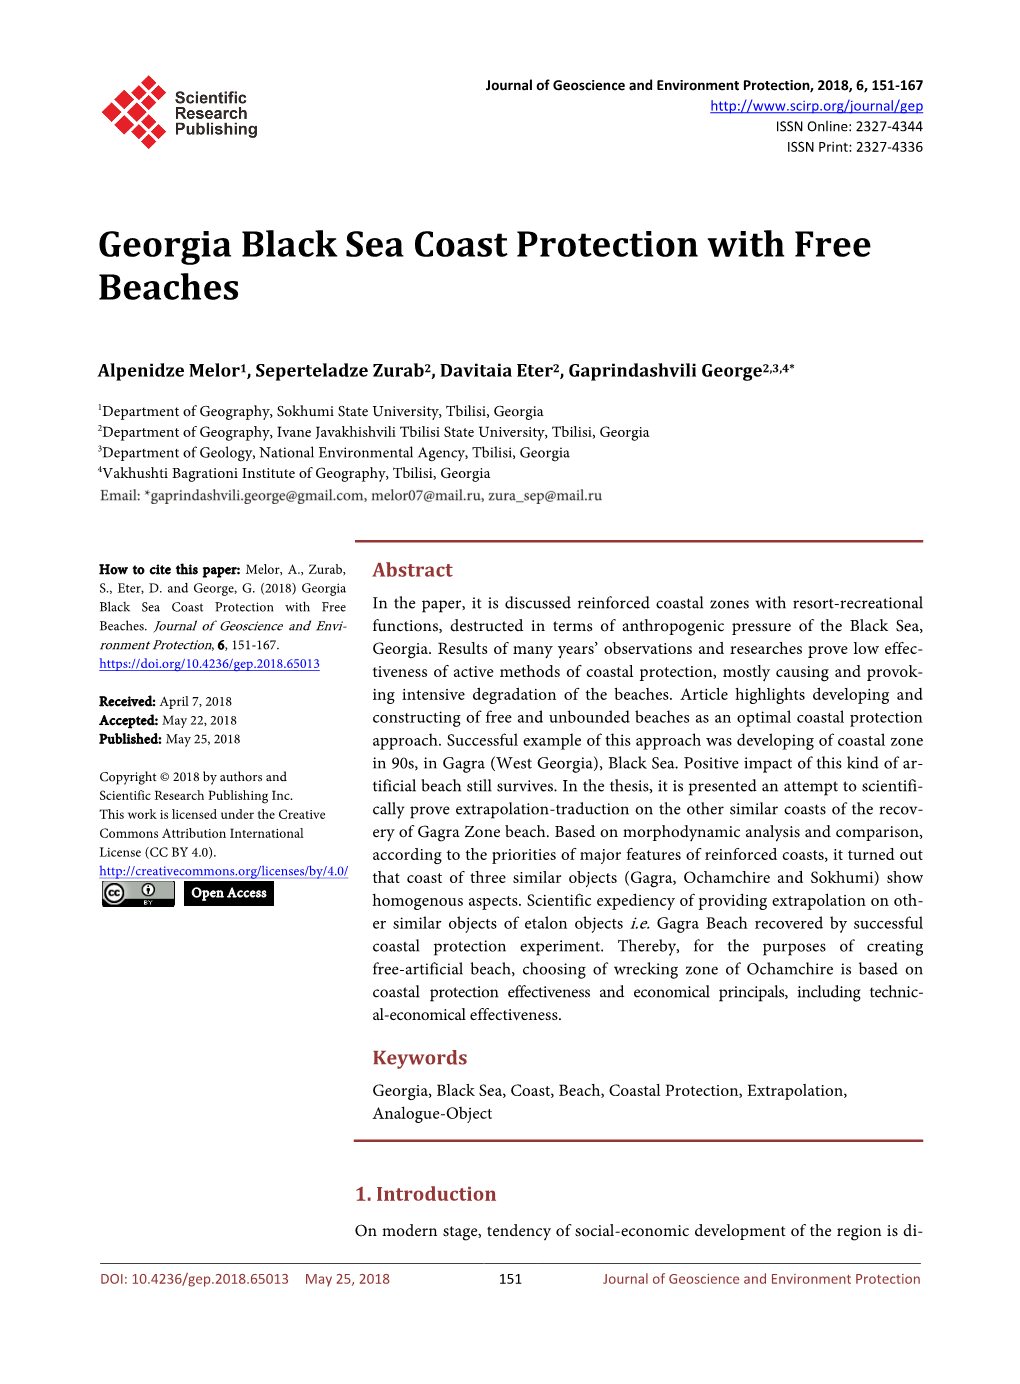 Georgia Black Sea Coast Protection with Free Beaches